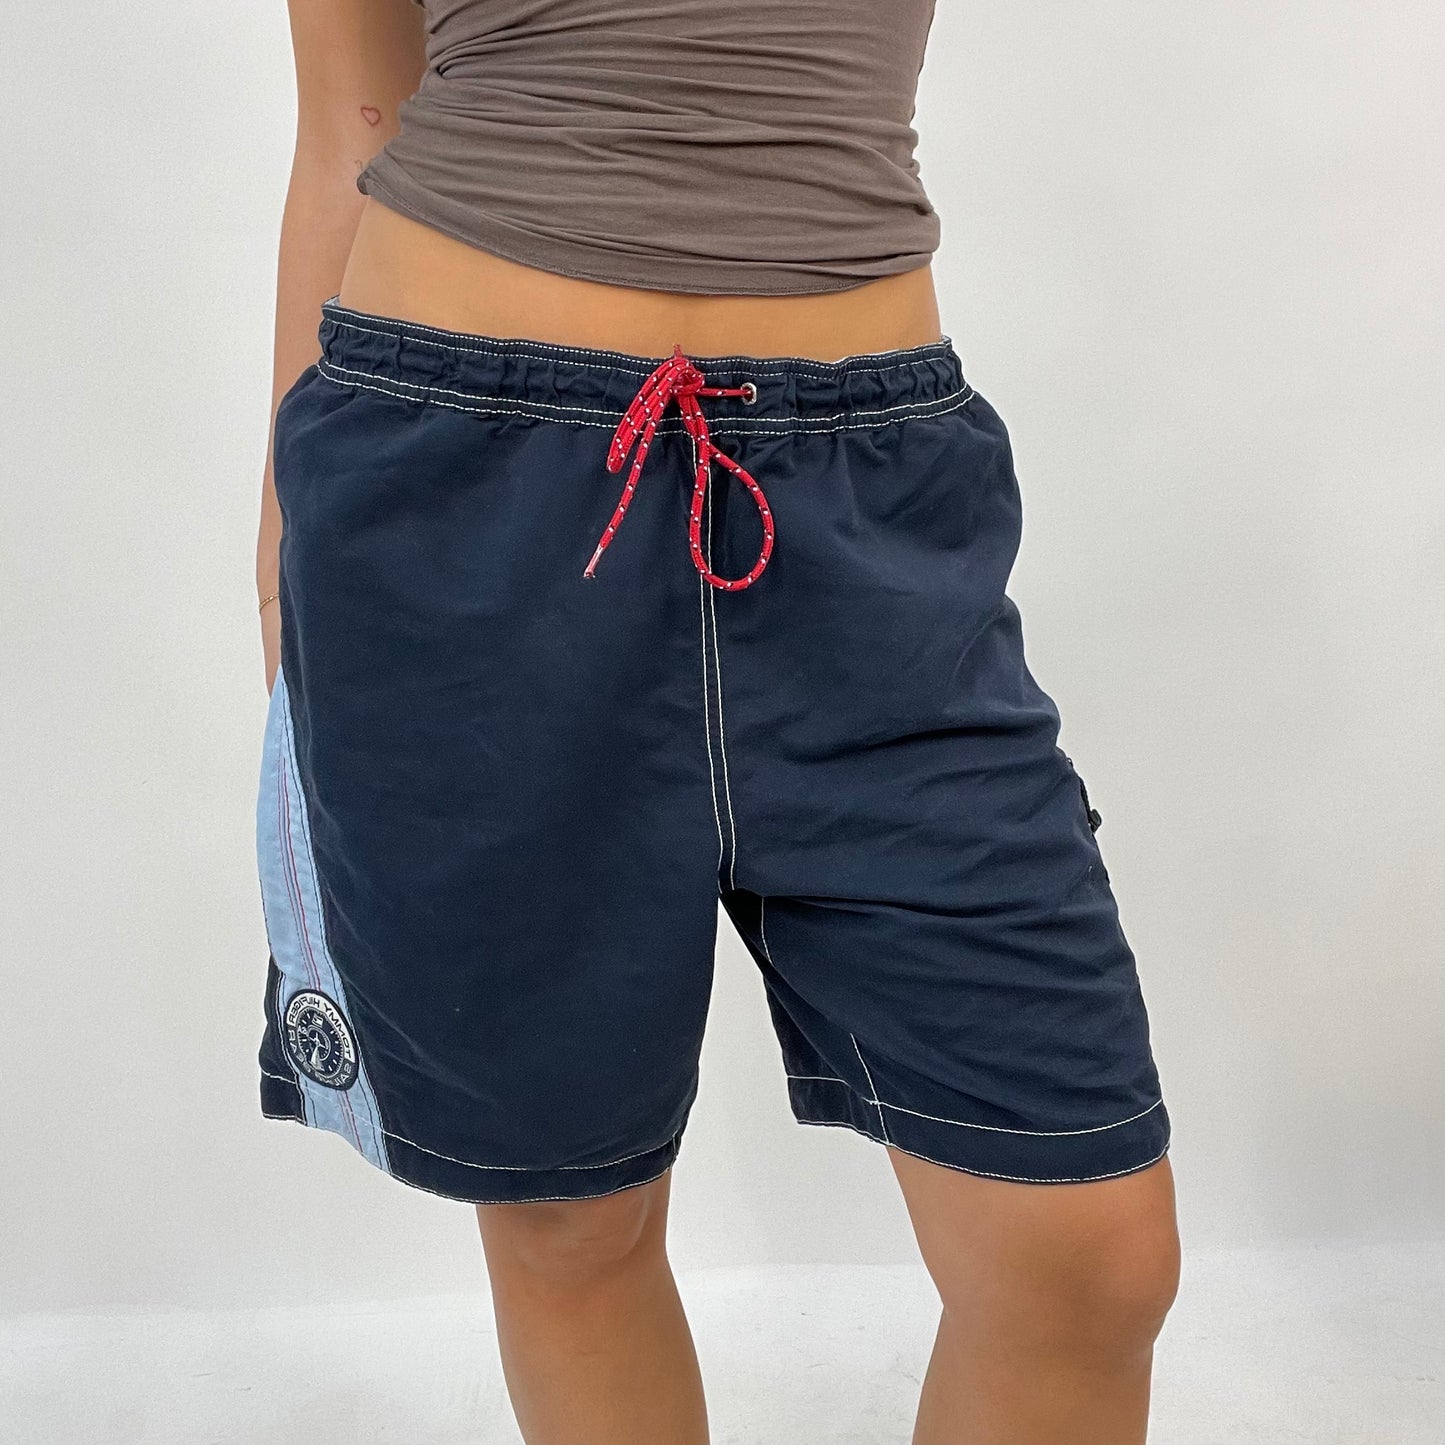 BLOKECORE DROP | tommy hilfiger navy shorts - medium